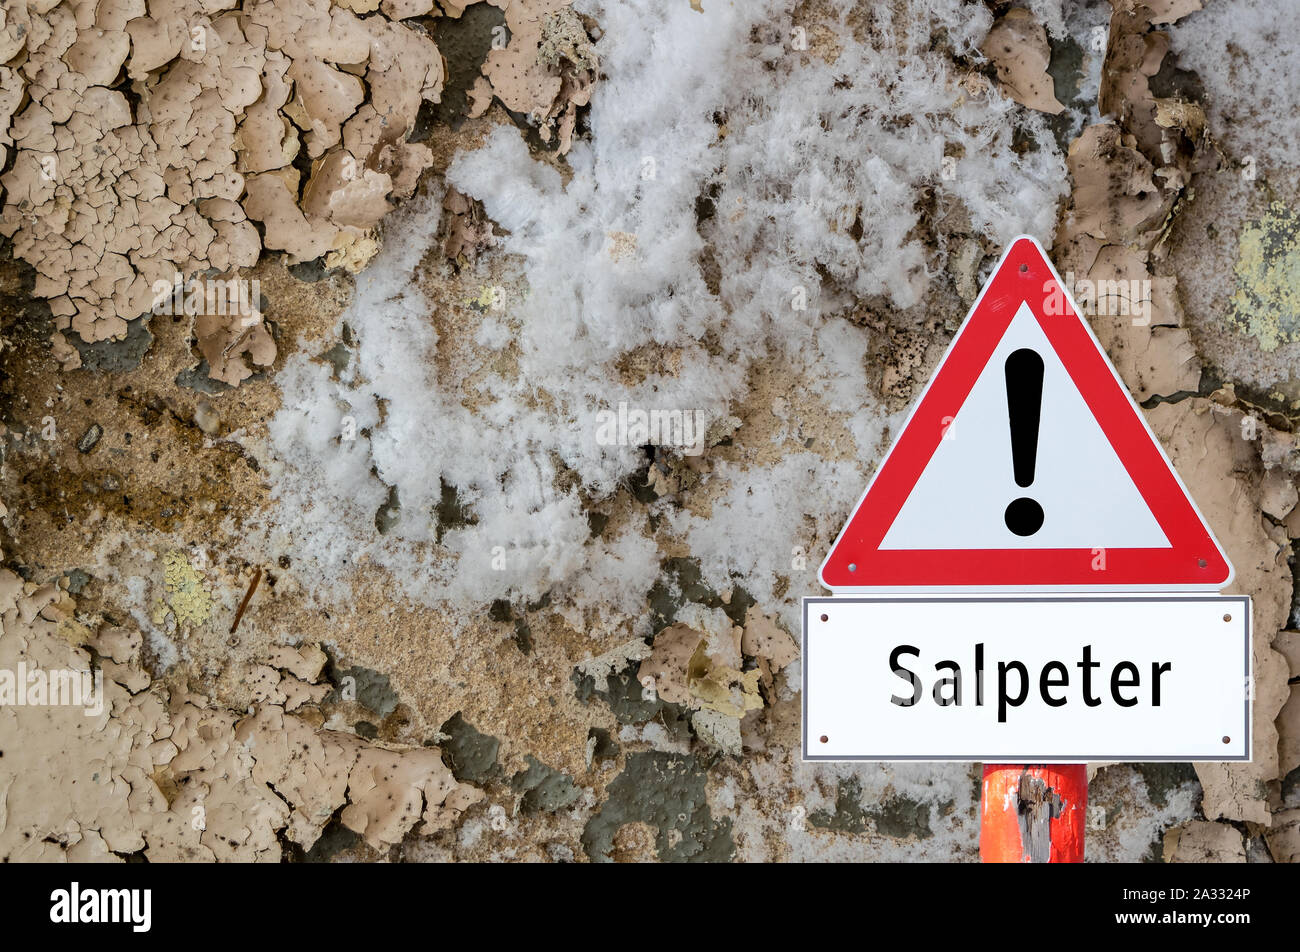 Saltpeter warning sign Stock Photo